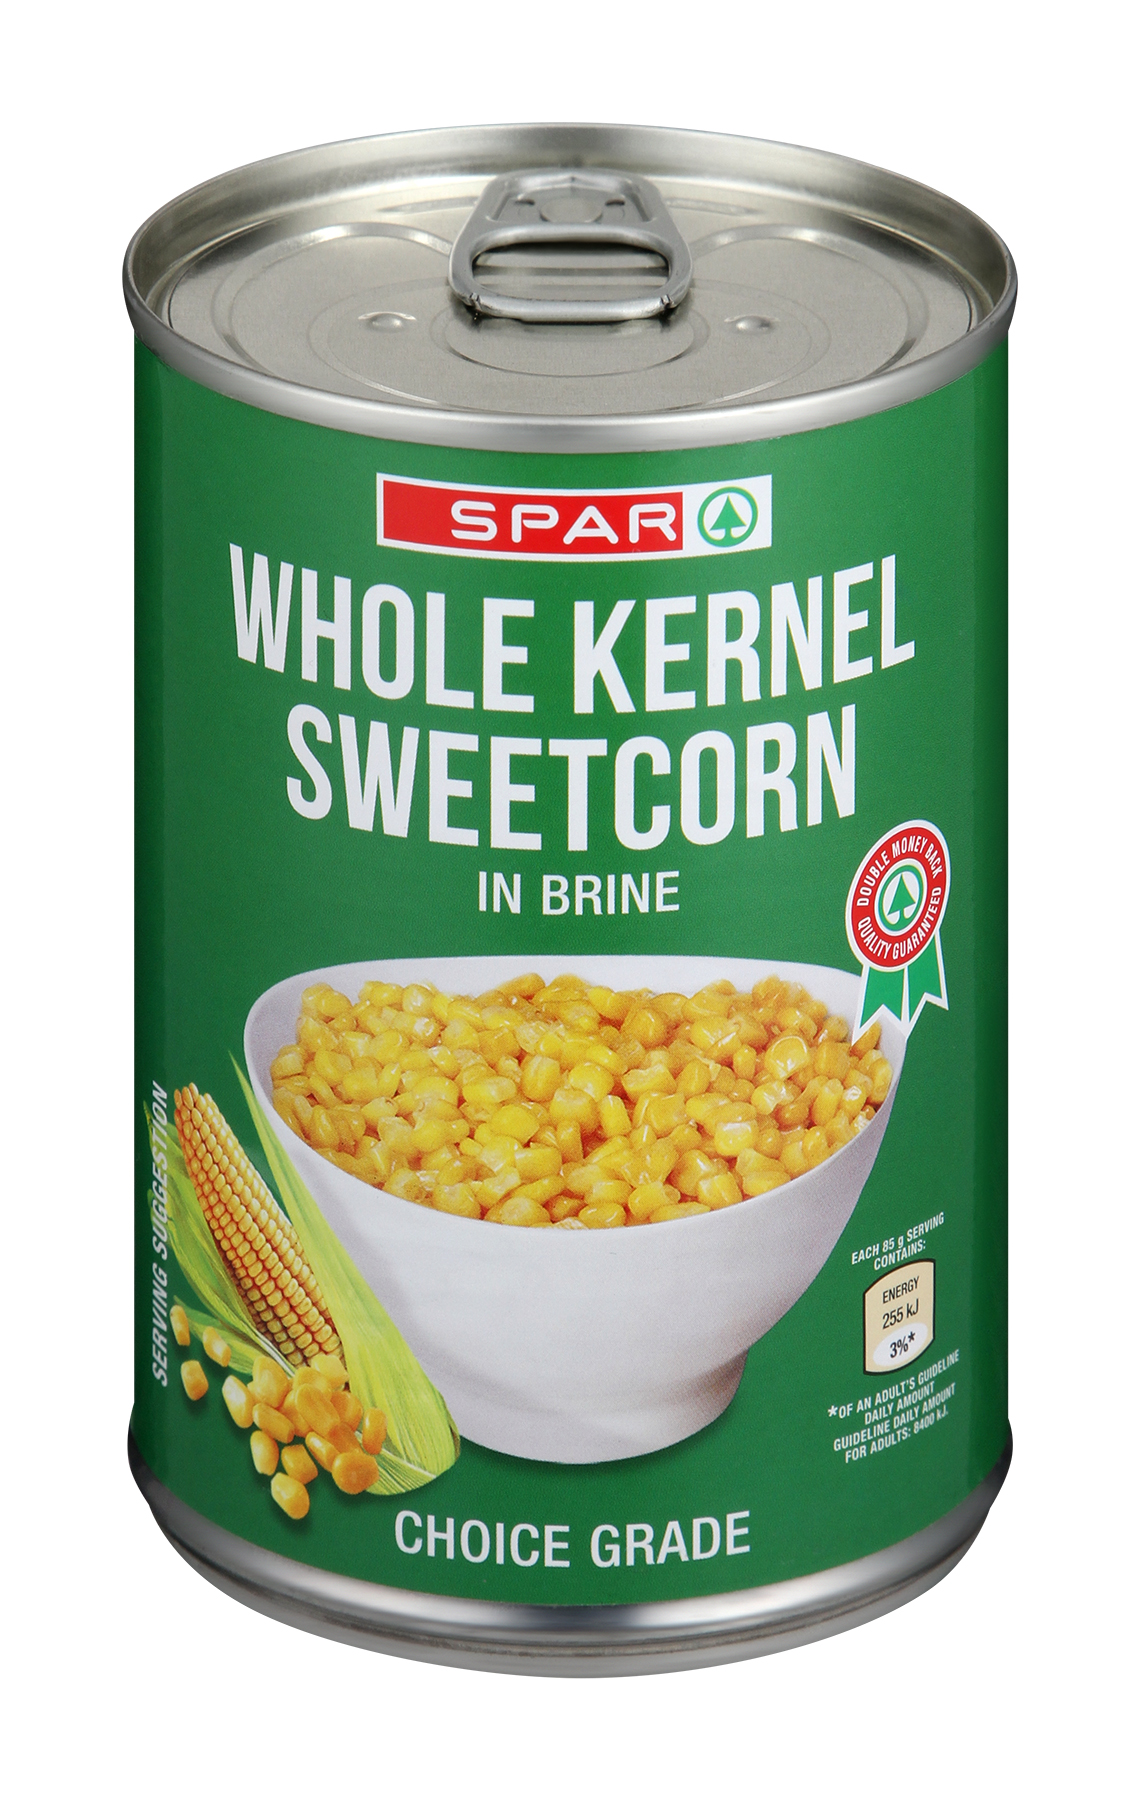 sweetcorn - whole kernel 